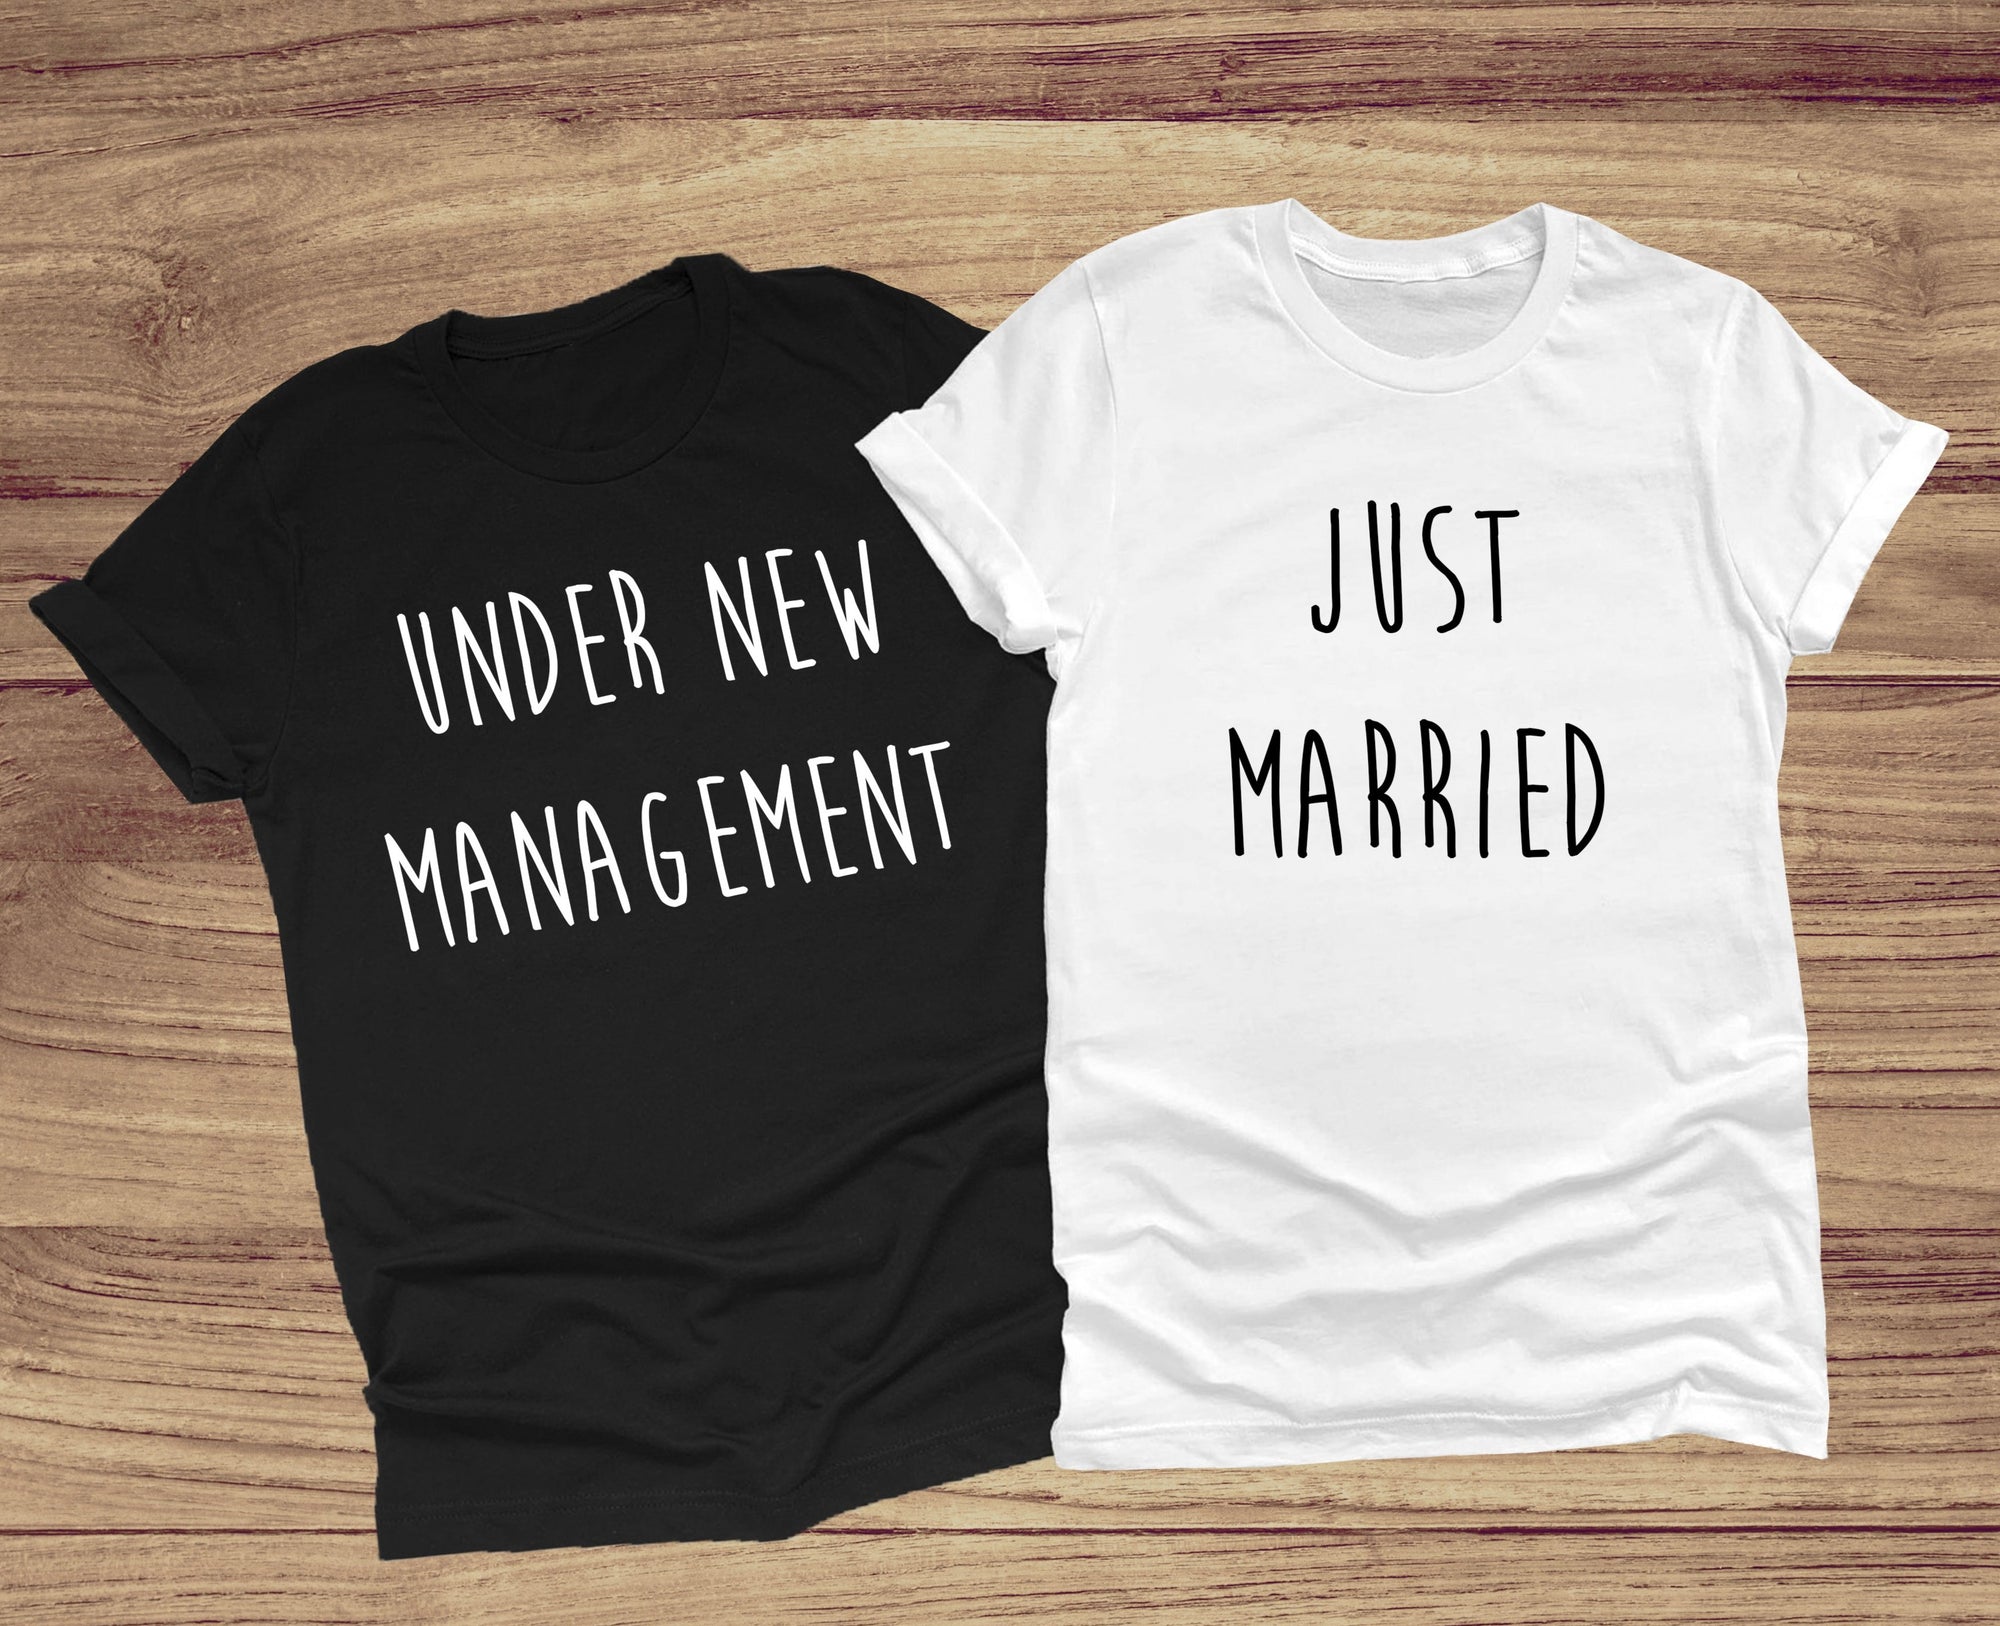 Newlyweds Married Engaged funny New Management Married Shirts Couple matching set Honeymoon Bridal Shower gift